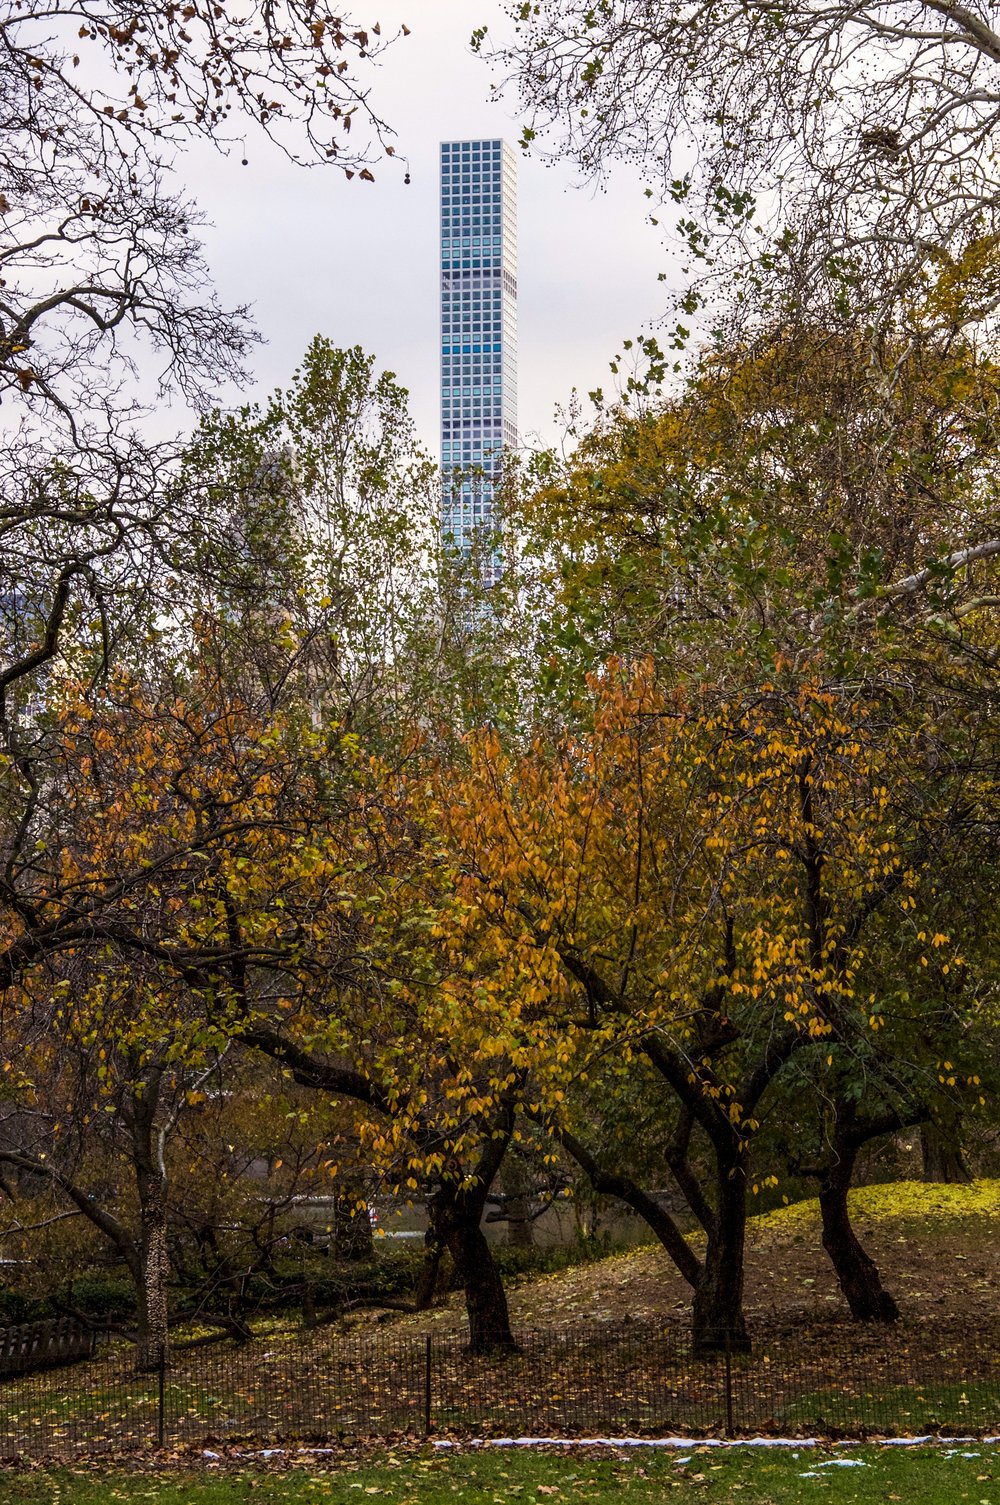 @ 432_Park_Avenue_Central Park_autumn trees_11.17.18_Photo © 2018 Joseph Kellard:kellardmedia.com.jpg